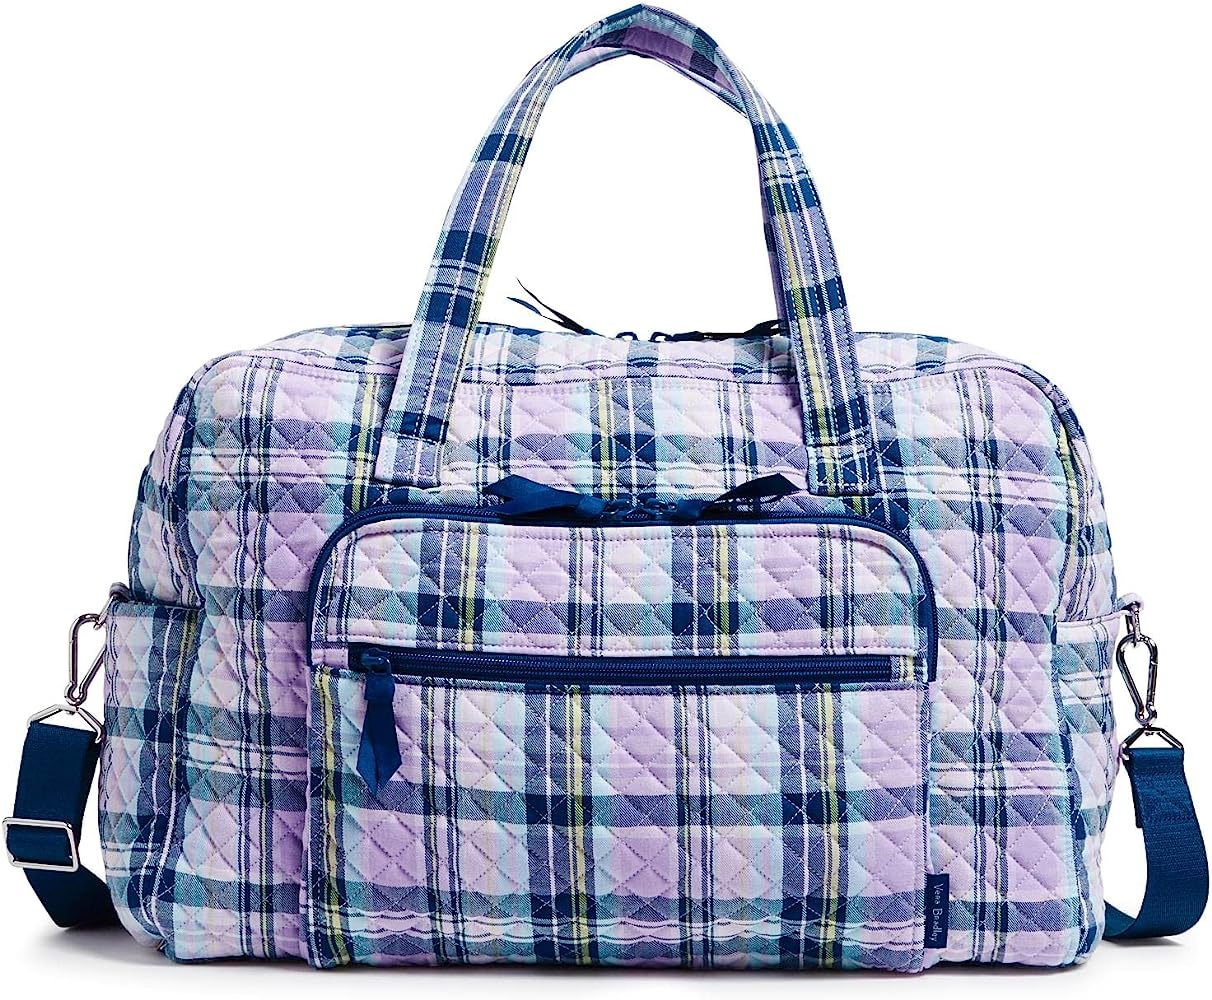 Vera Bradley Women's Cotton Grand Weekender Travel Bag